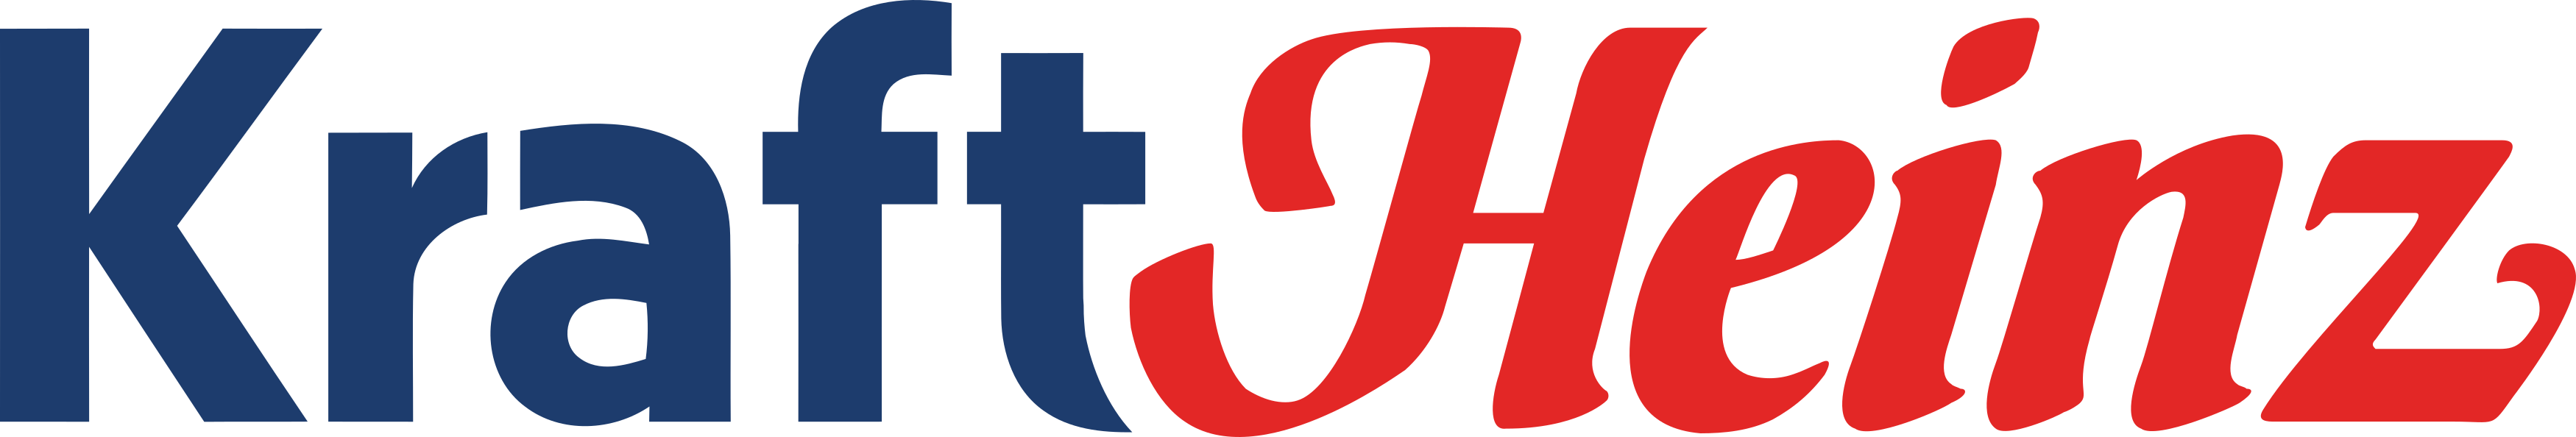 The Kraft Heinz Company logo